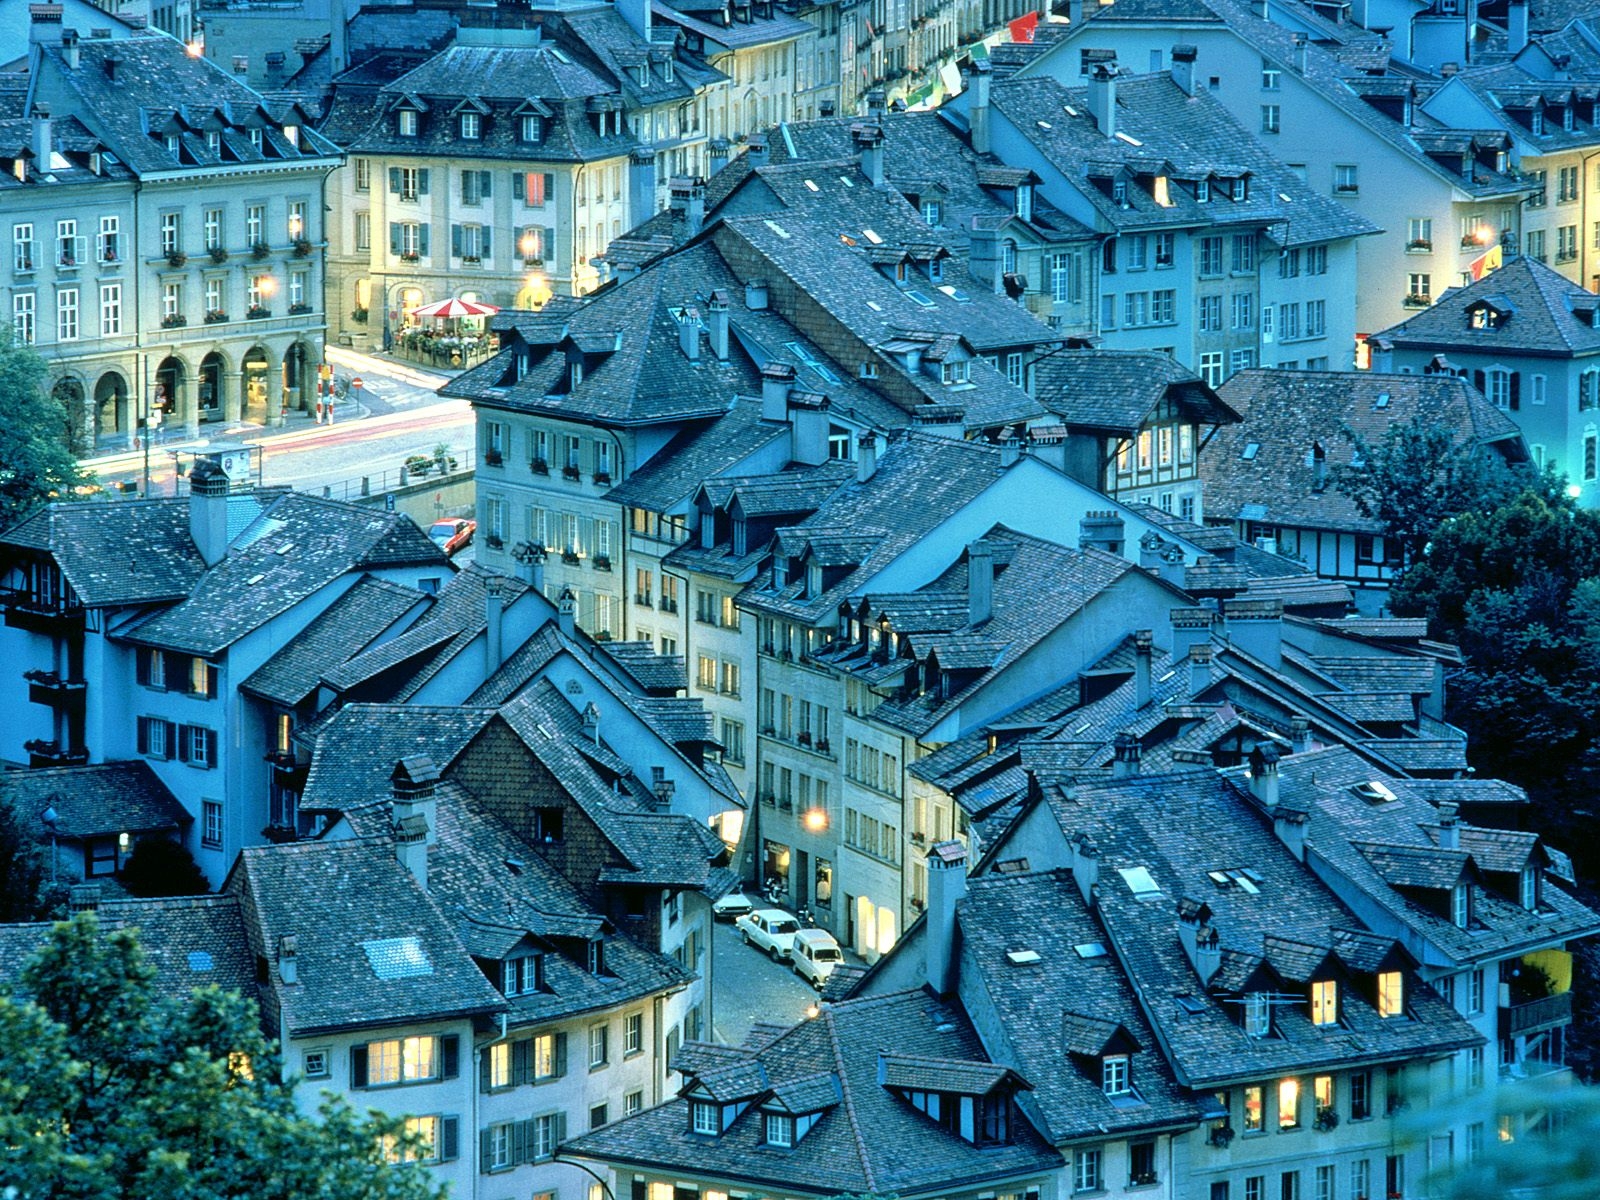 Fond d'ecran Berne en Suisse, de nuit